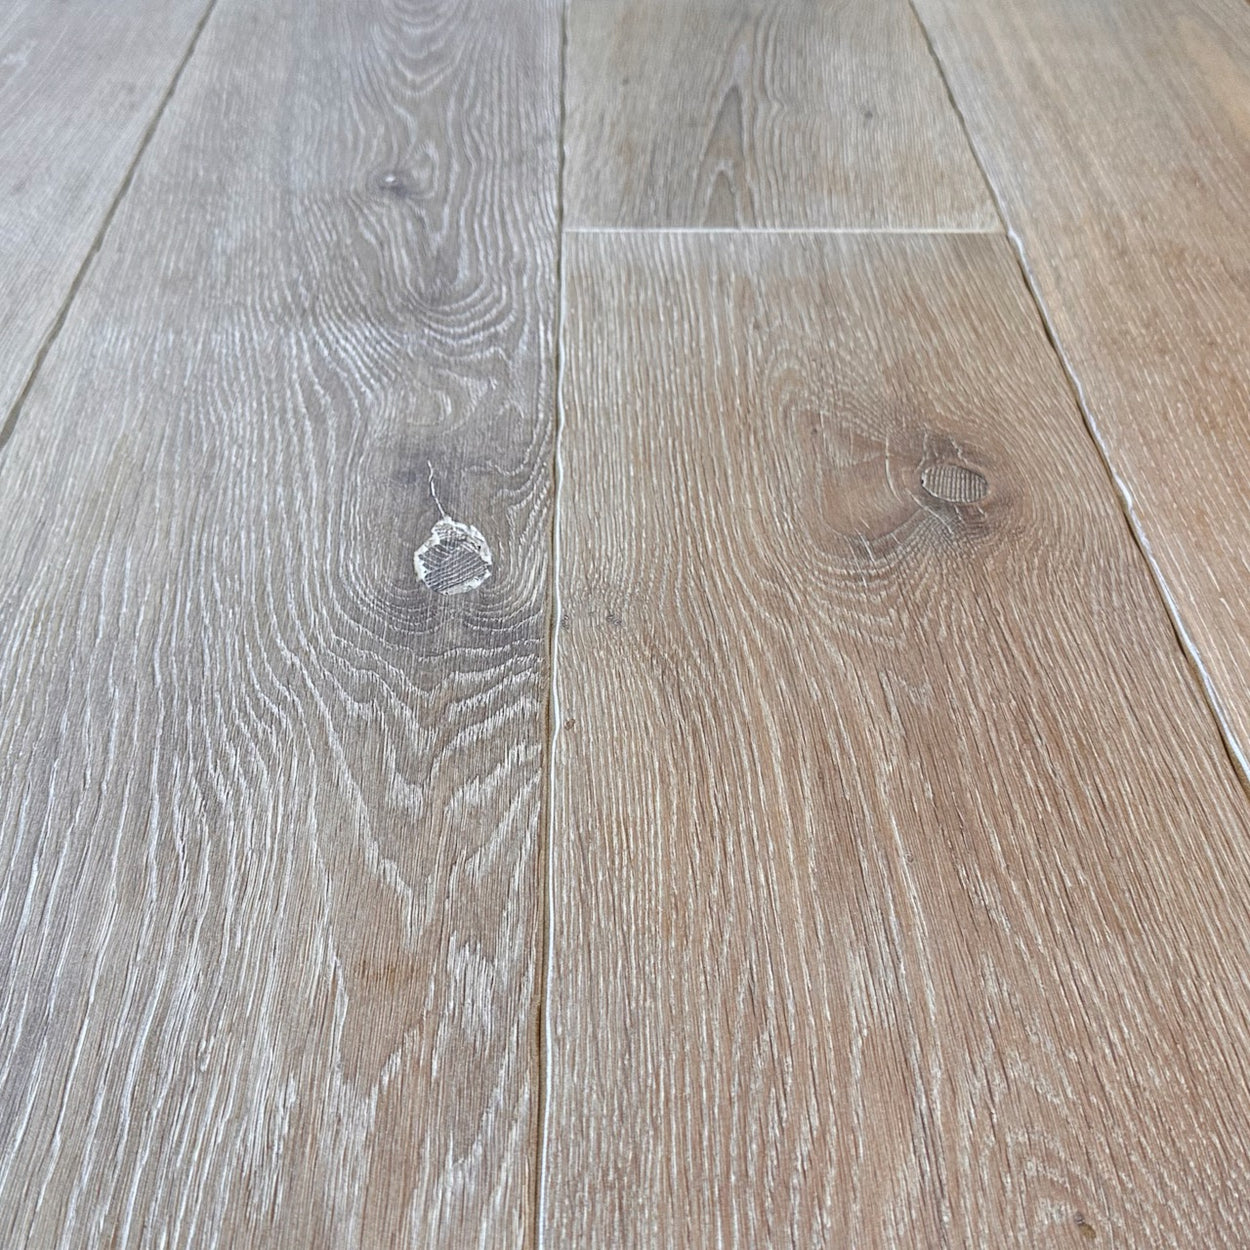 Sample of Cotswolds Oak Flooring